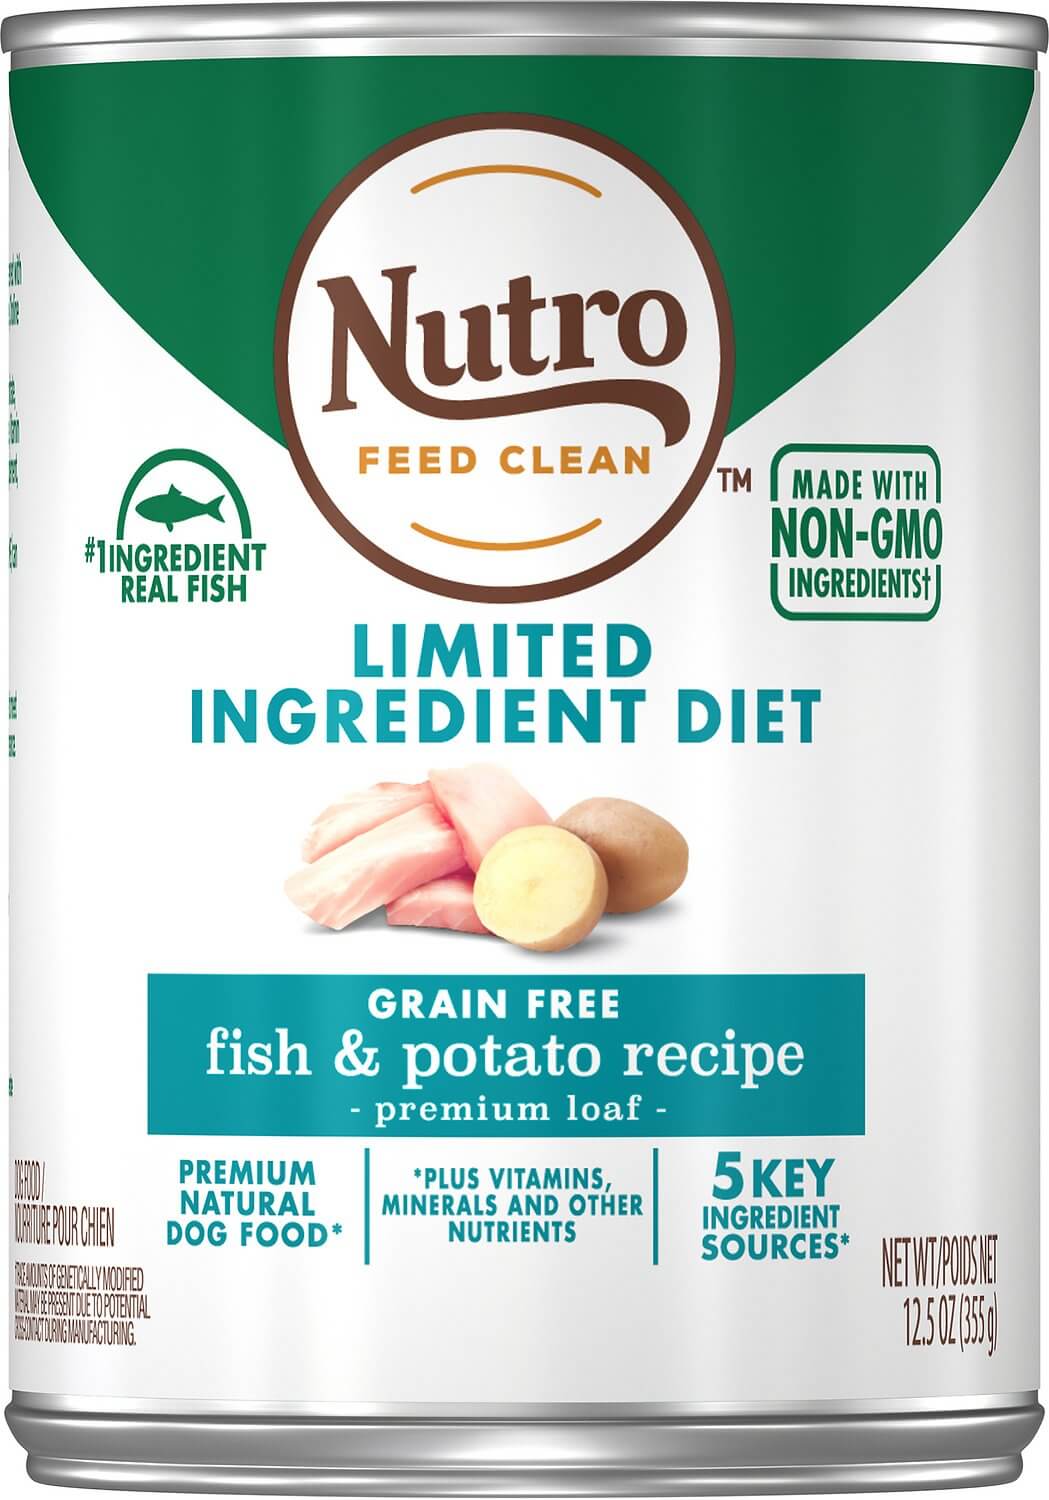 Nutro Limited Ingredient Diet Cans